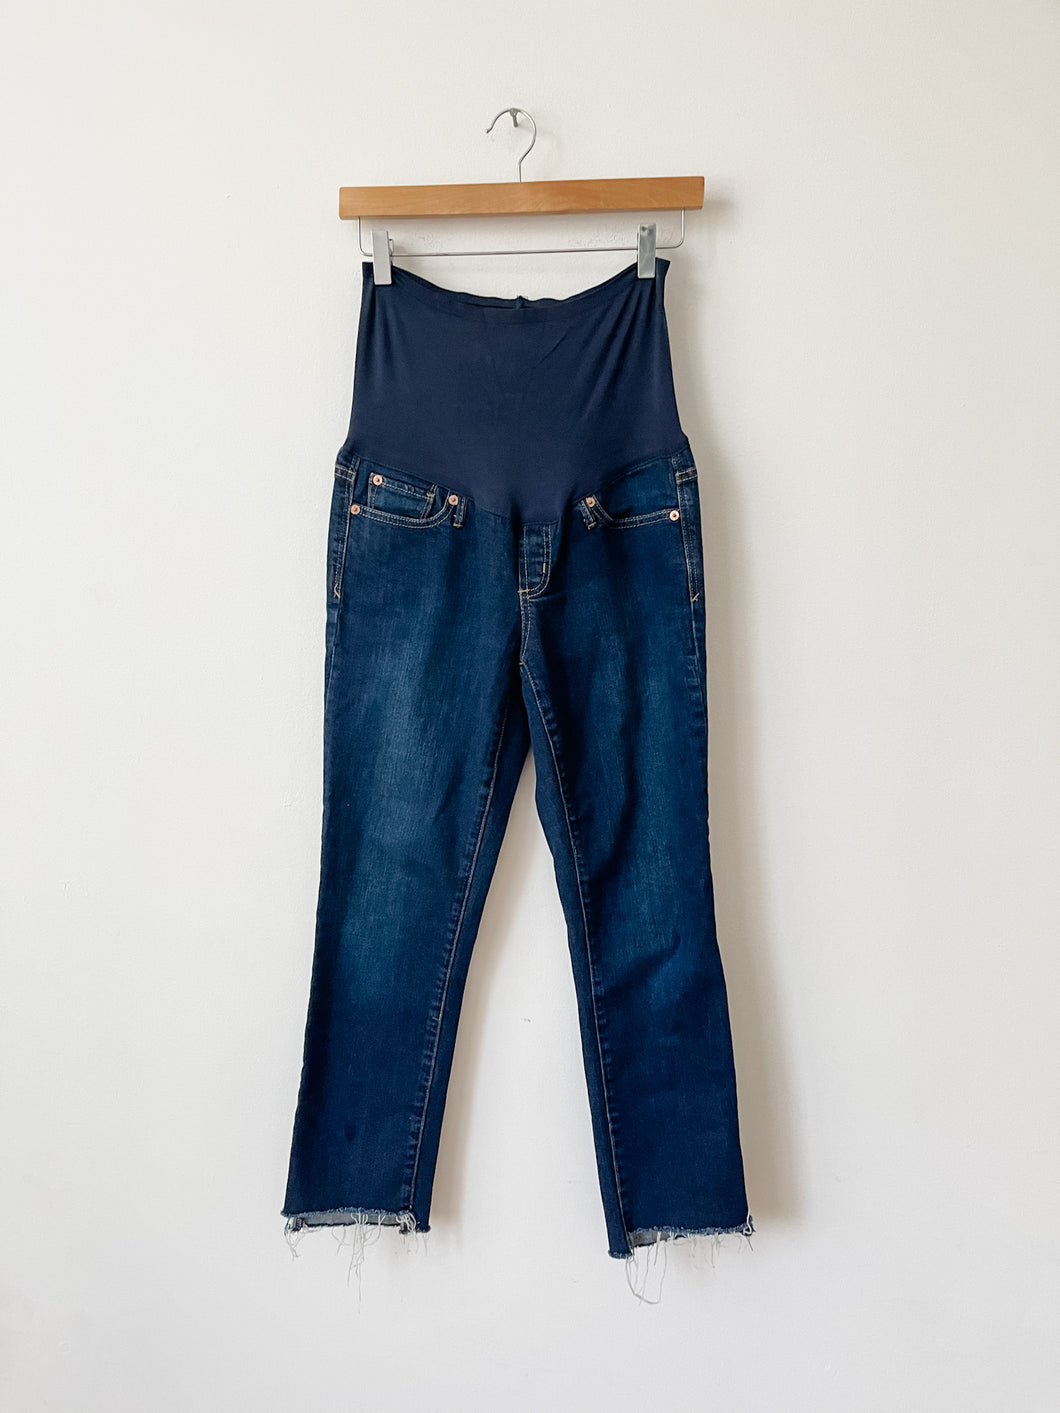 Maternity Blue Gap Jeans Size 27